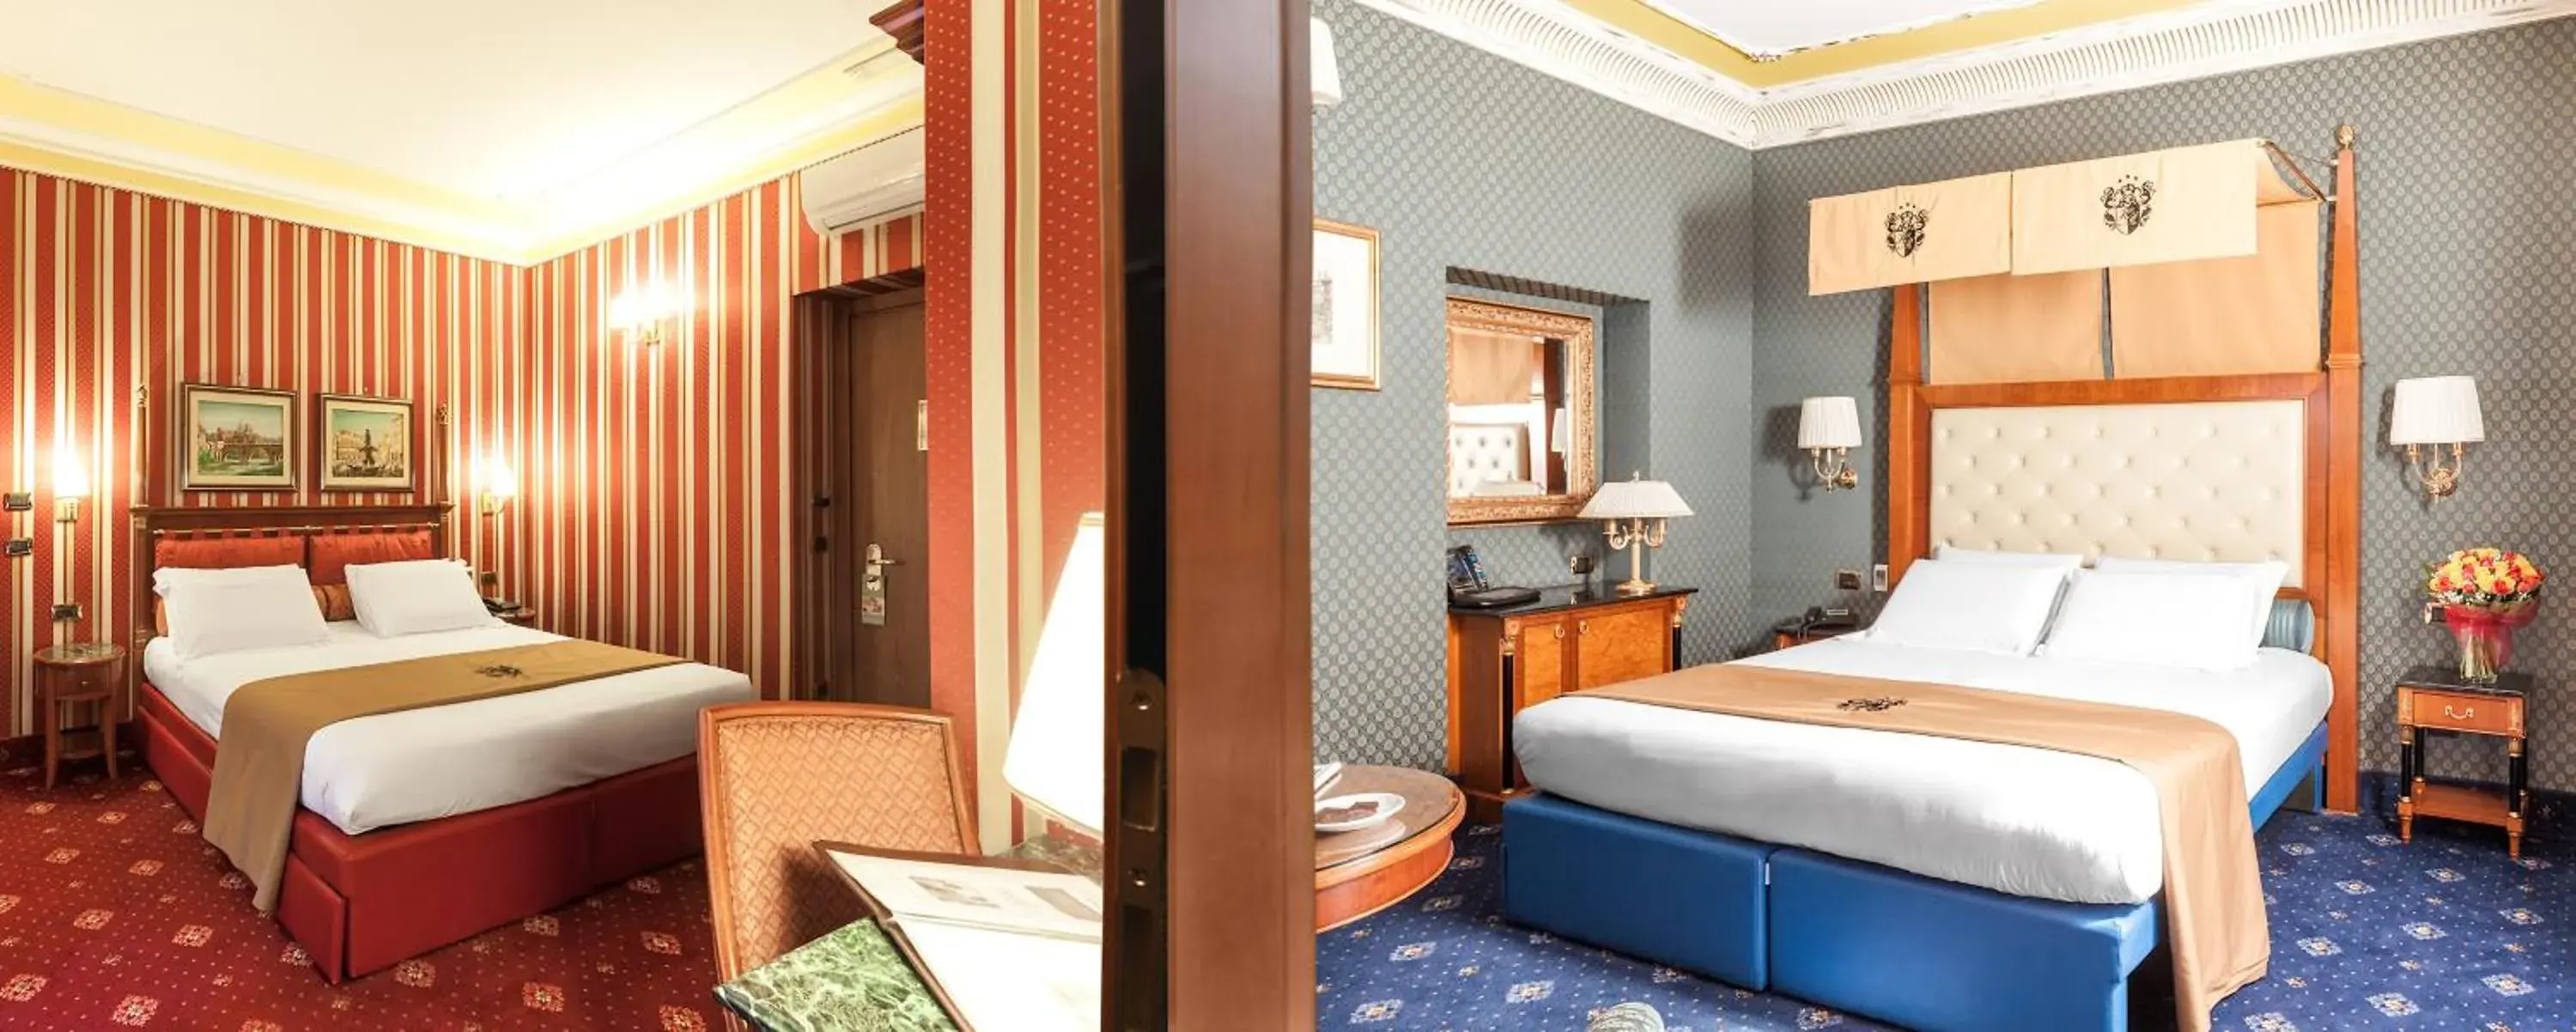 Bed in Hotel Manfredi Suite In Rome